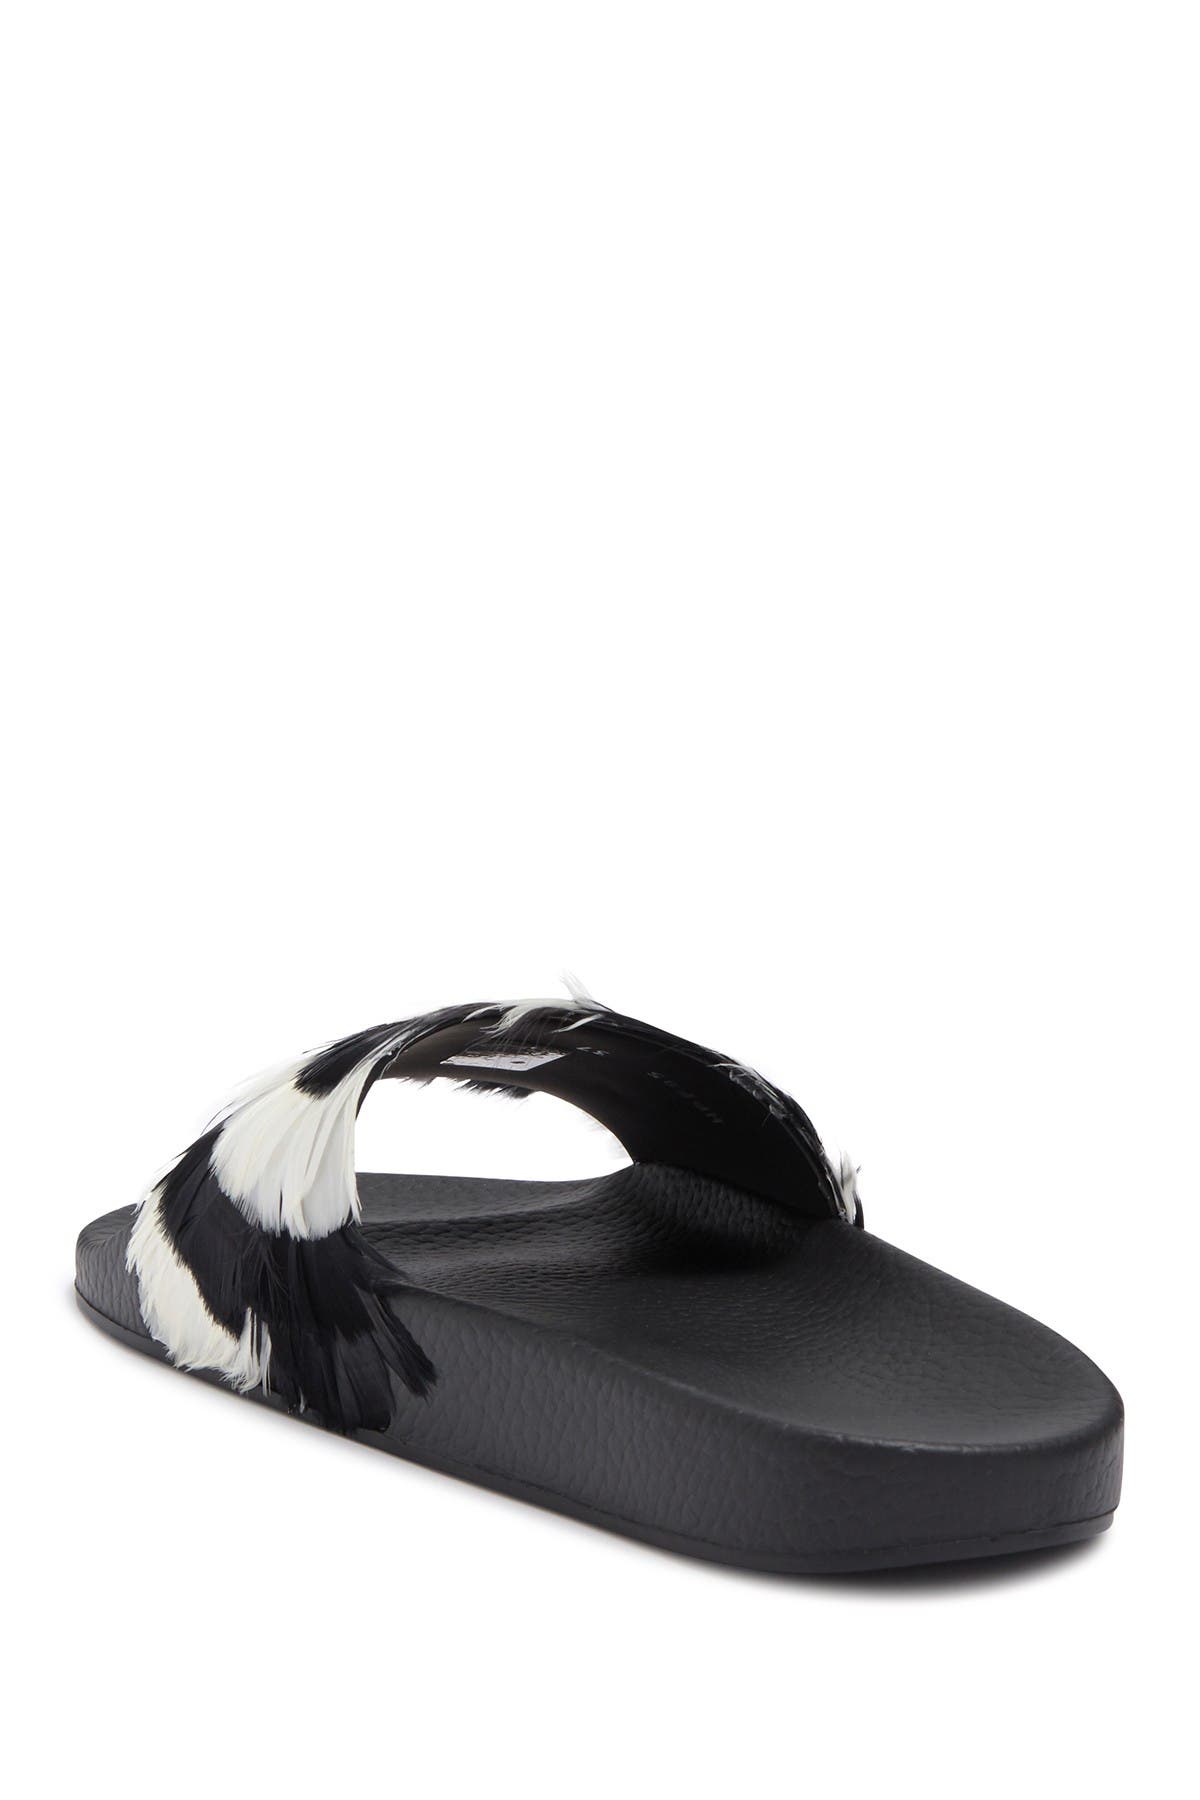 Valentino Garavani Feather Slide Sandal In Nero-light Ivory/nero